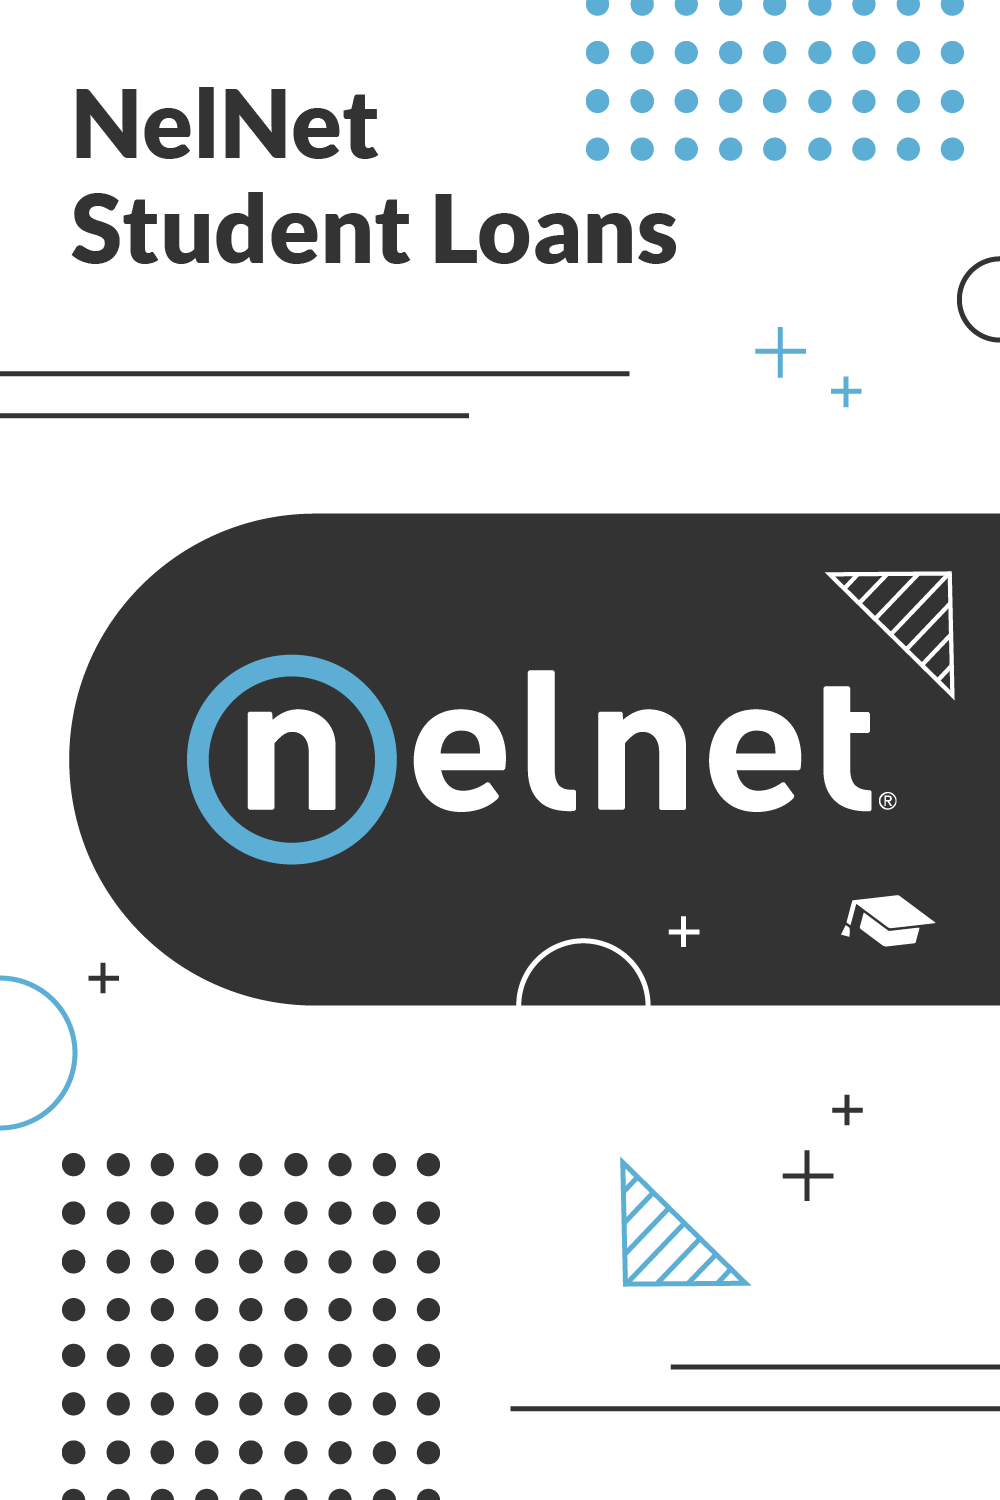 NelNet Student Loans